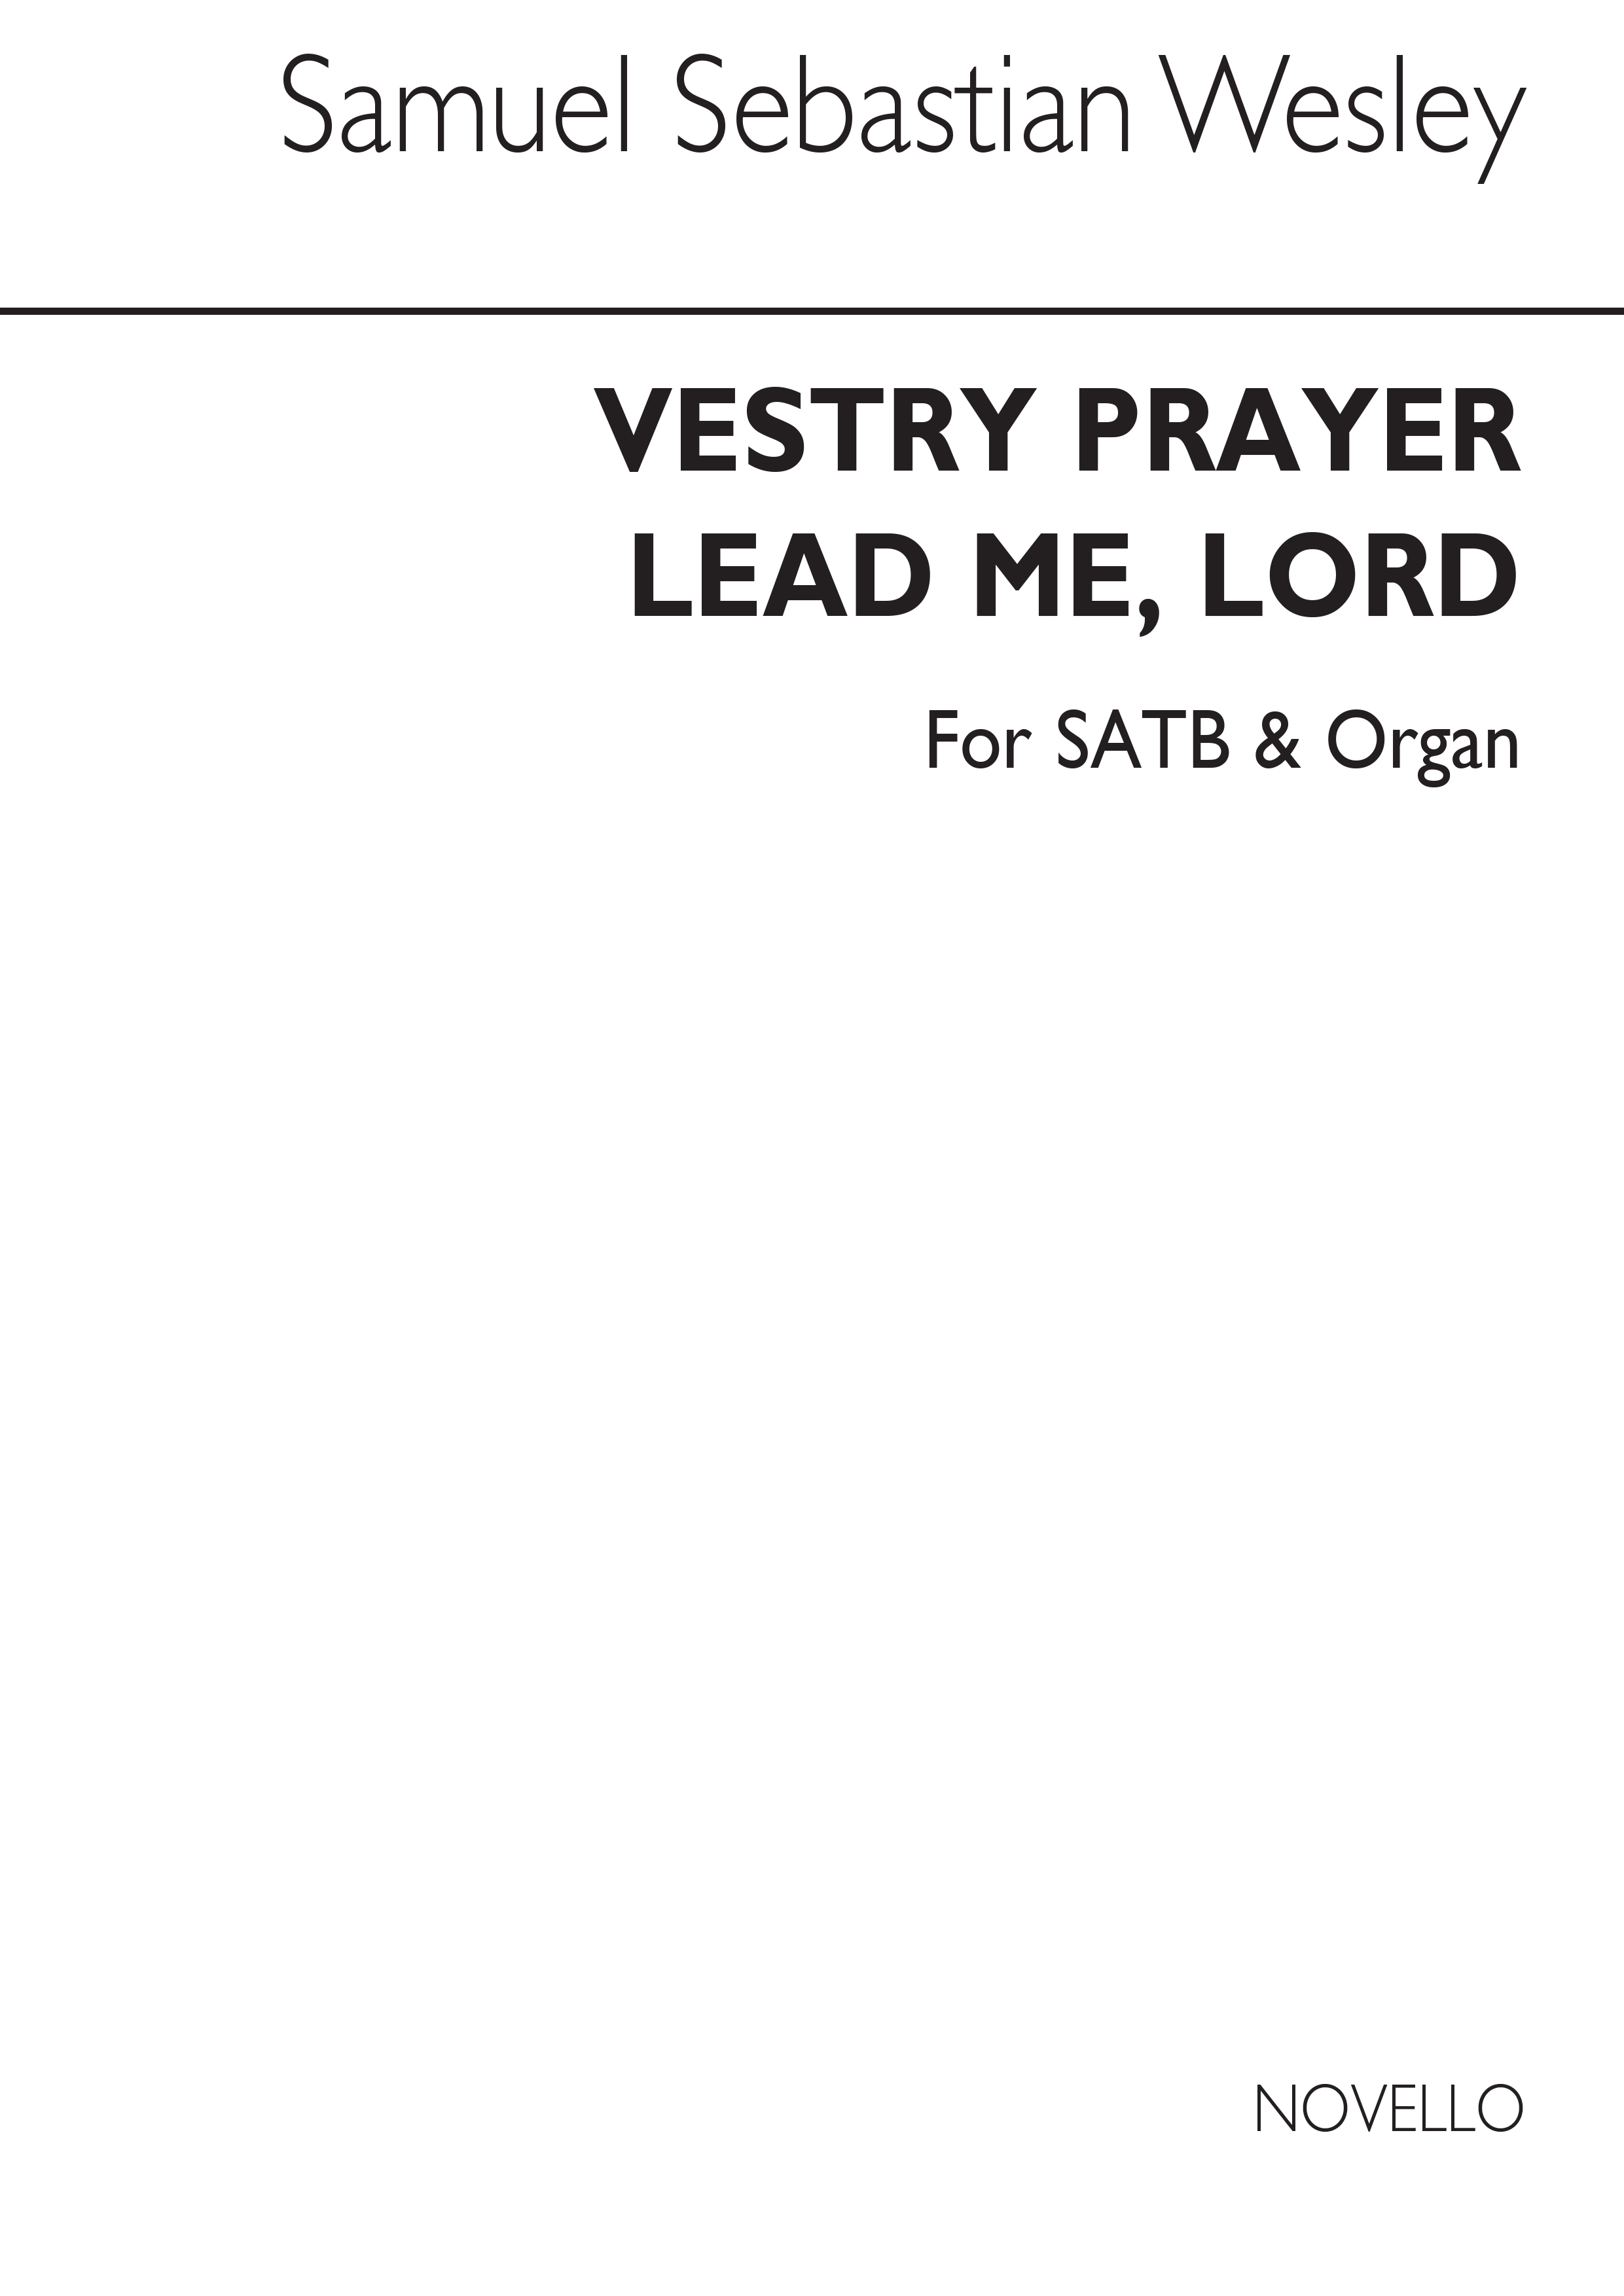 Samuel Wesley: Vestry Prayer (Lead Me Lord): SATB: Vocal Score